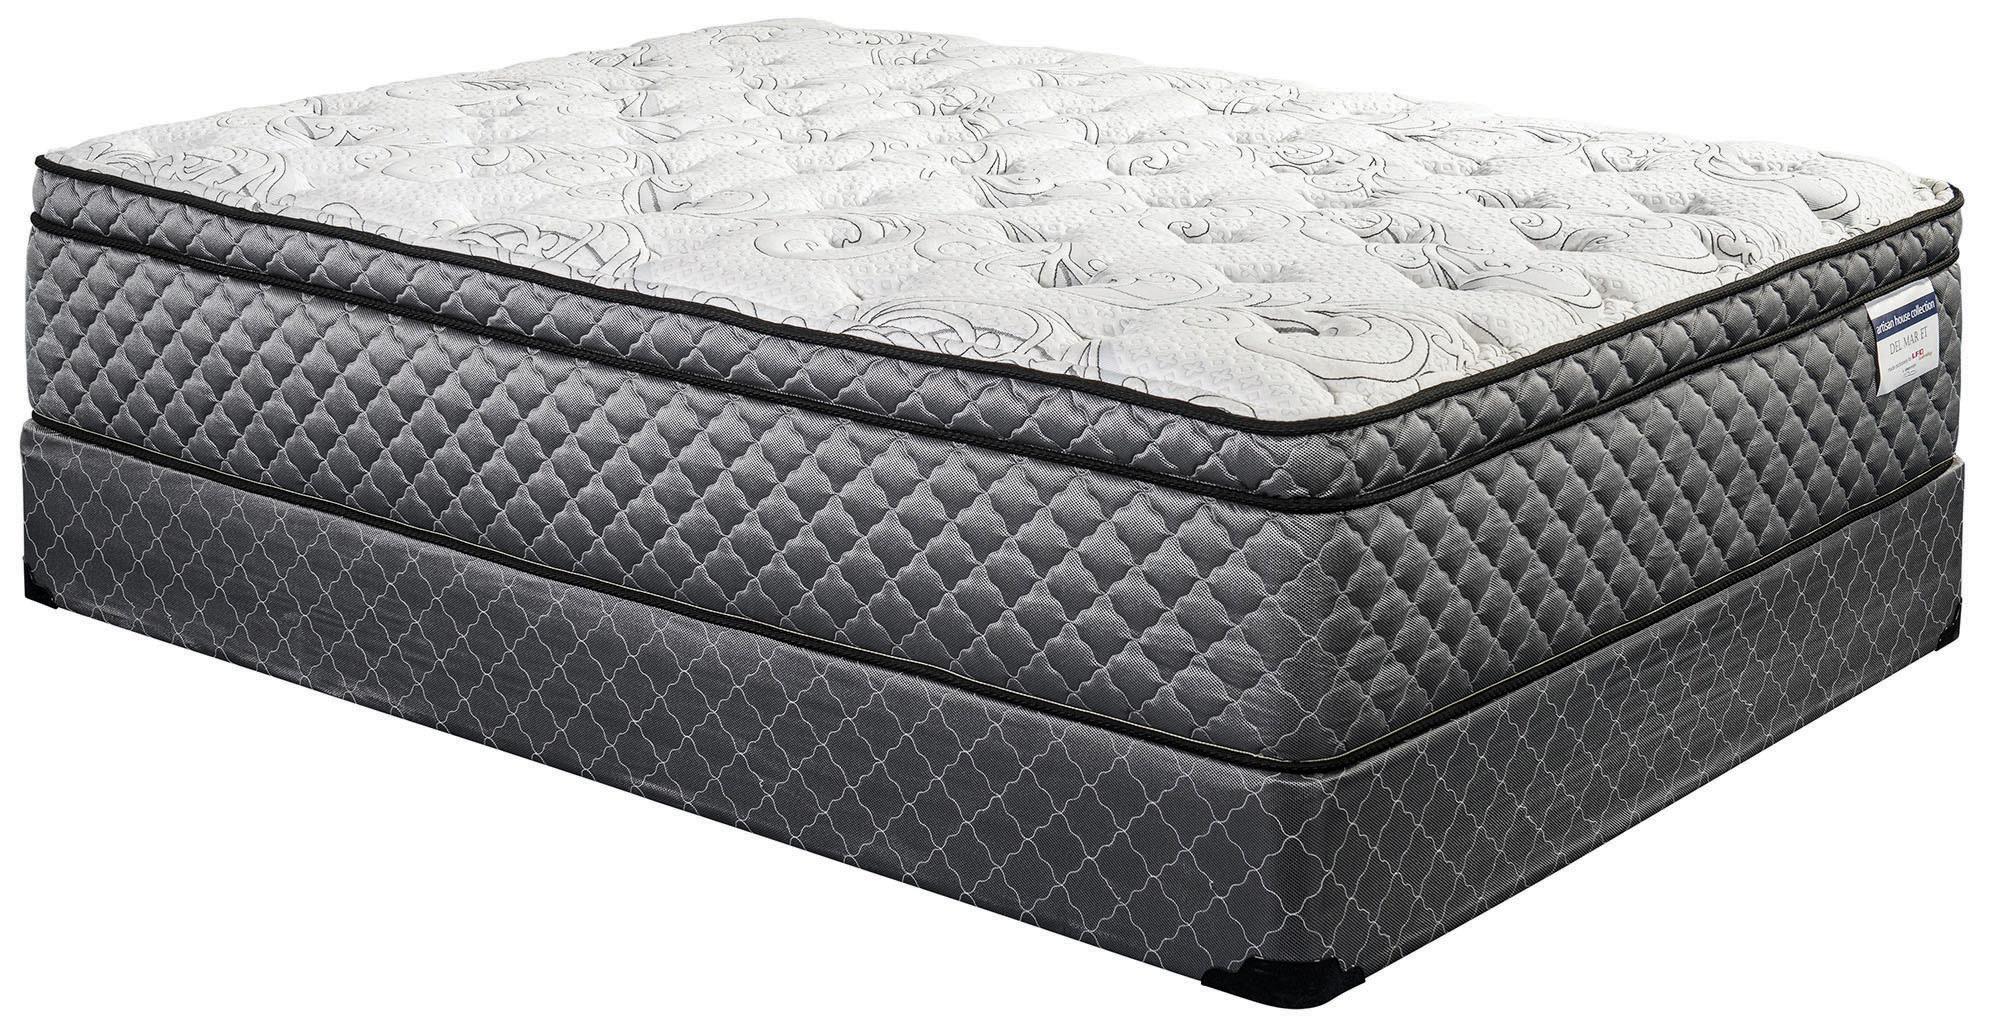 sleep design mattress company